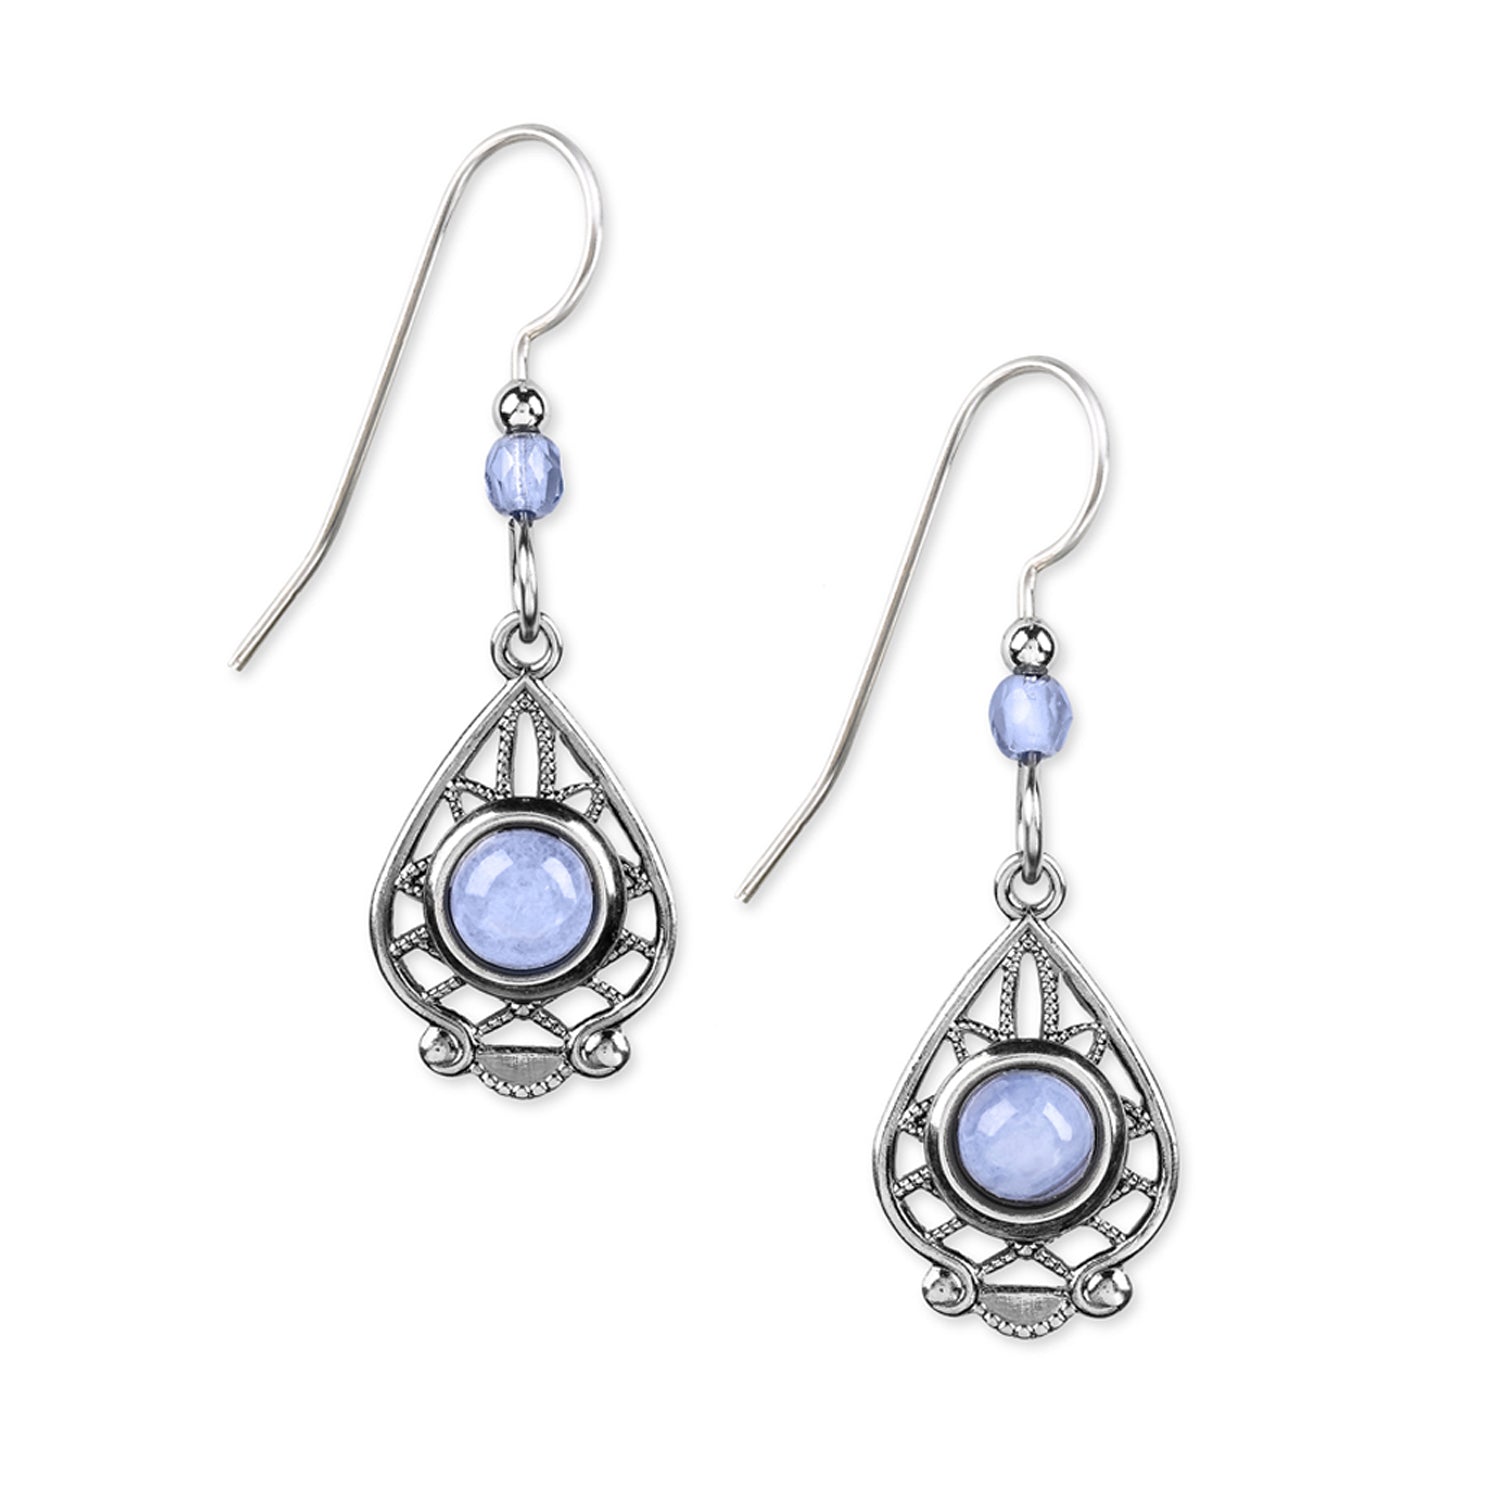 Silver Forest Blue Lace Agate & Filigree Drop Earrings